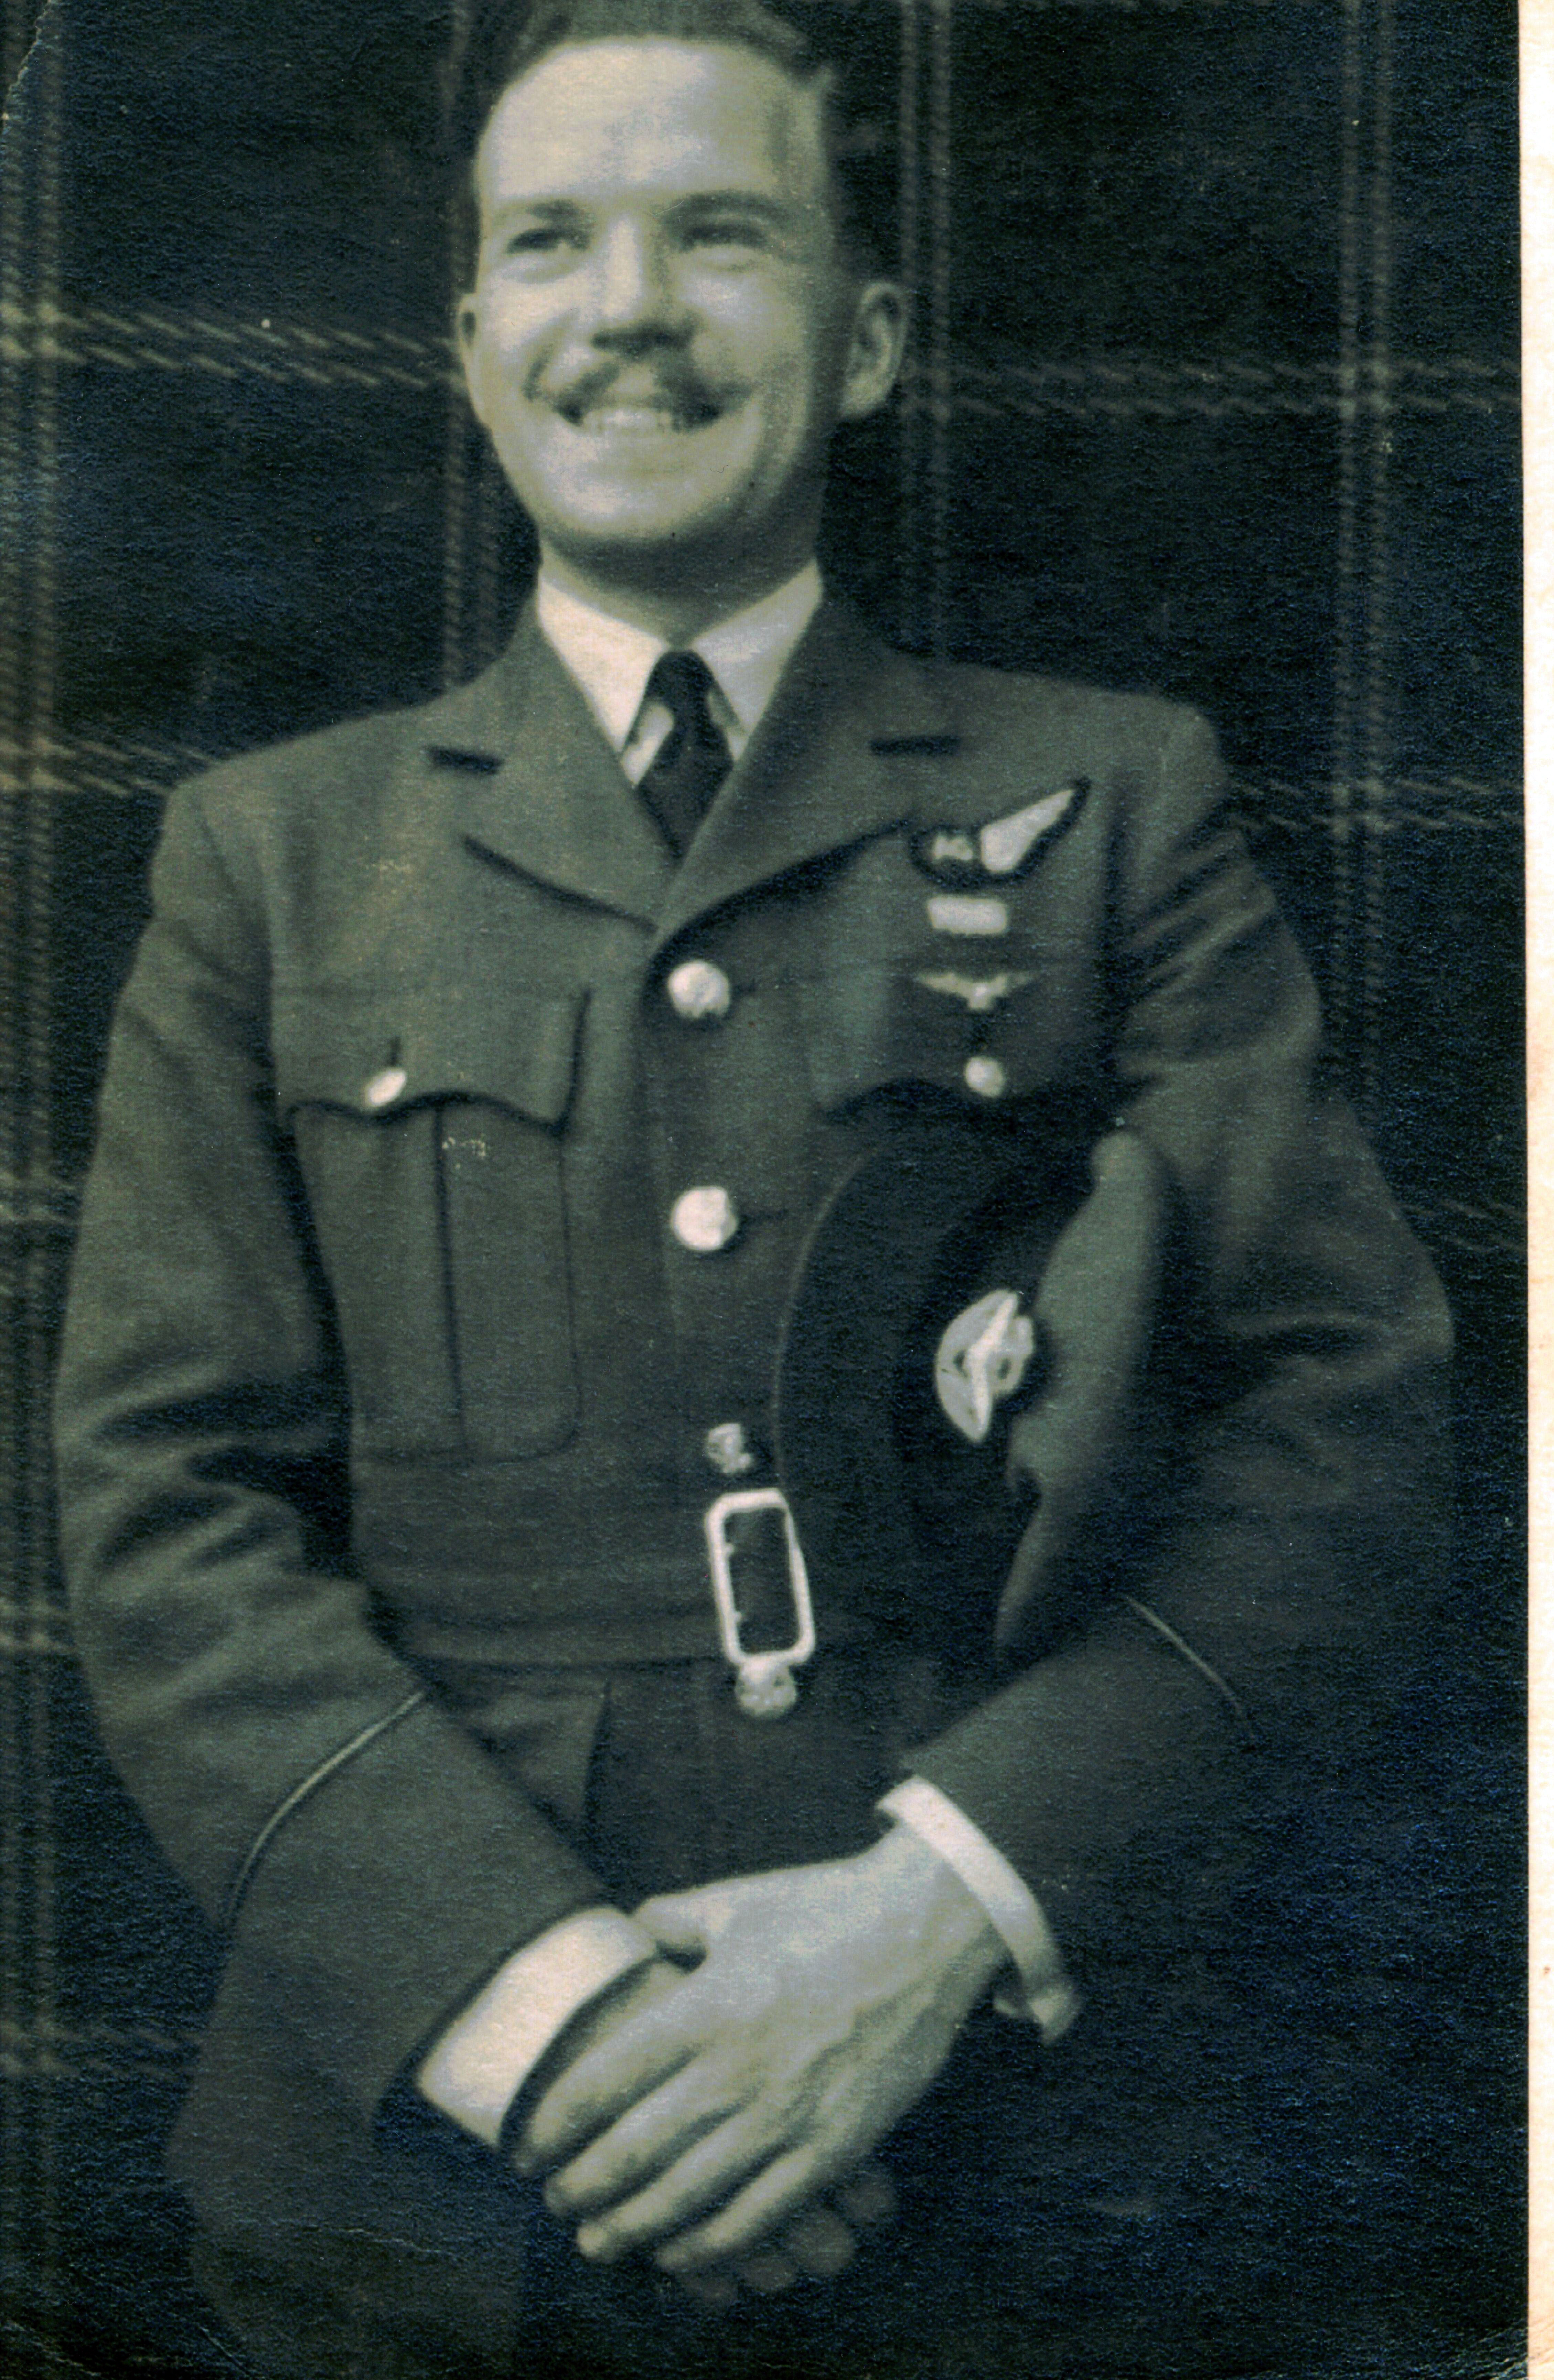 Black and white portrait photo of Pilot Officer Sprack